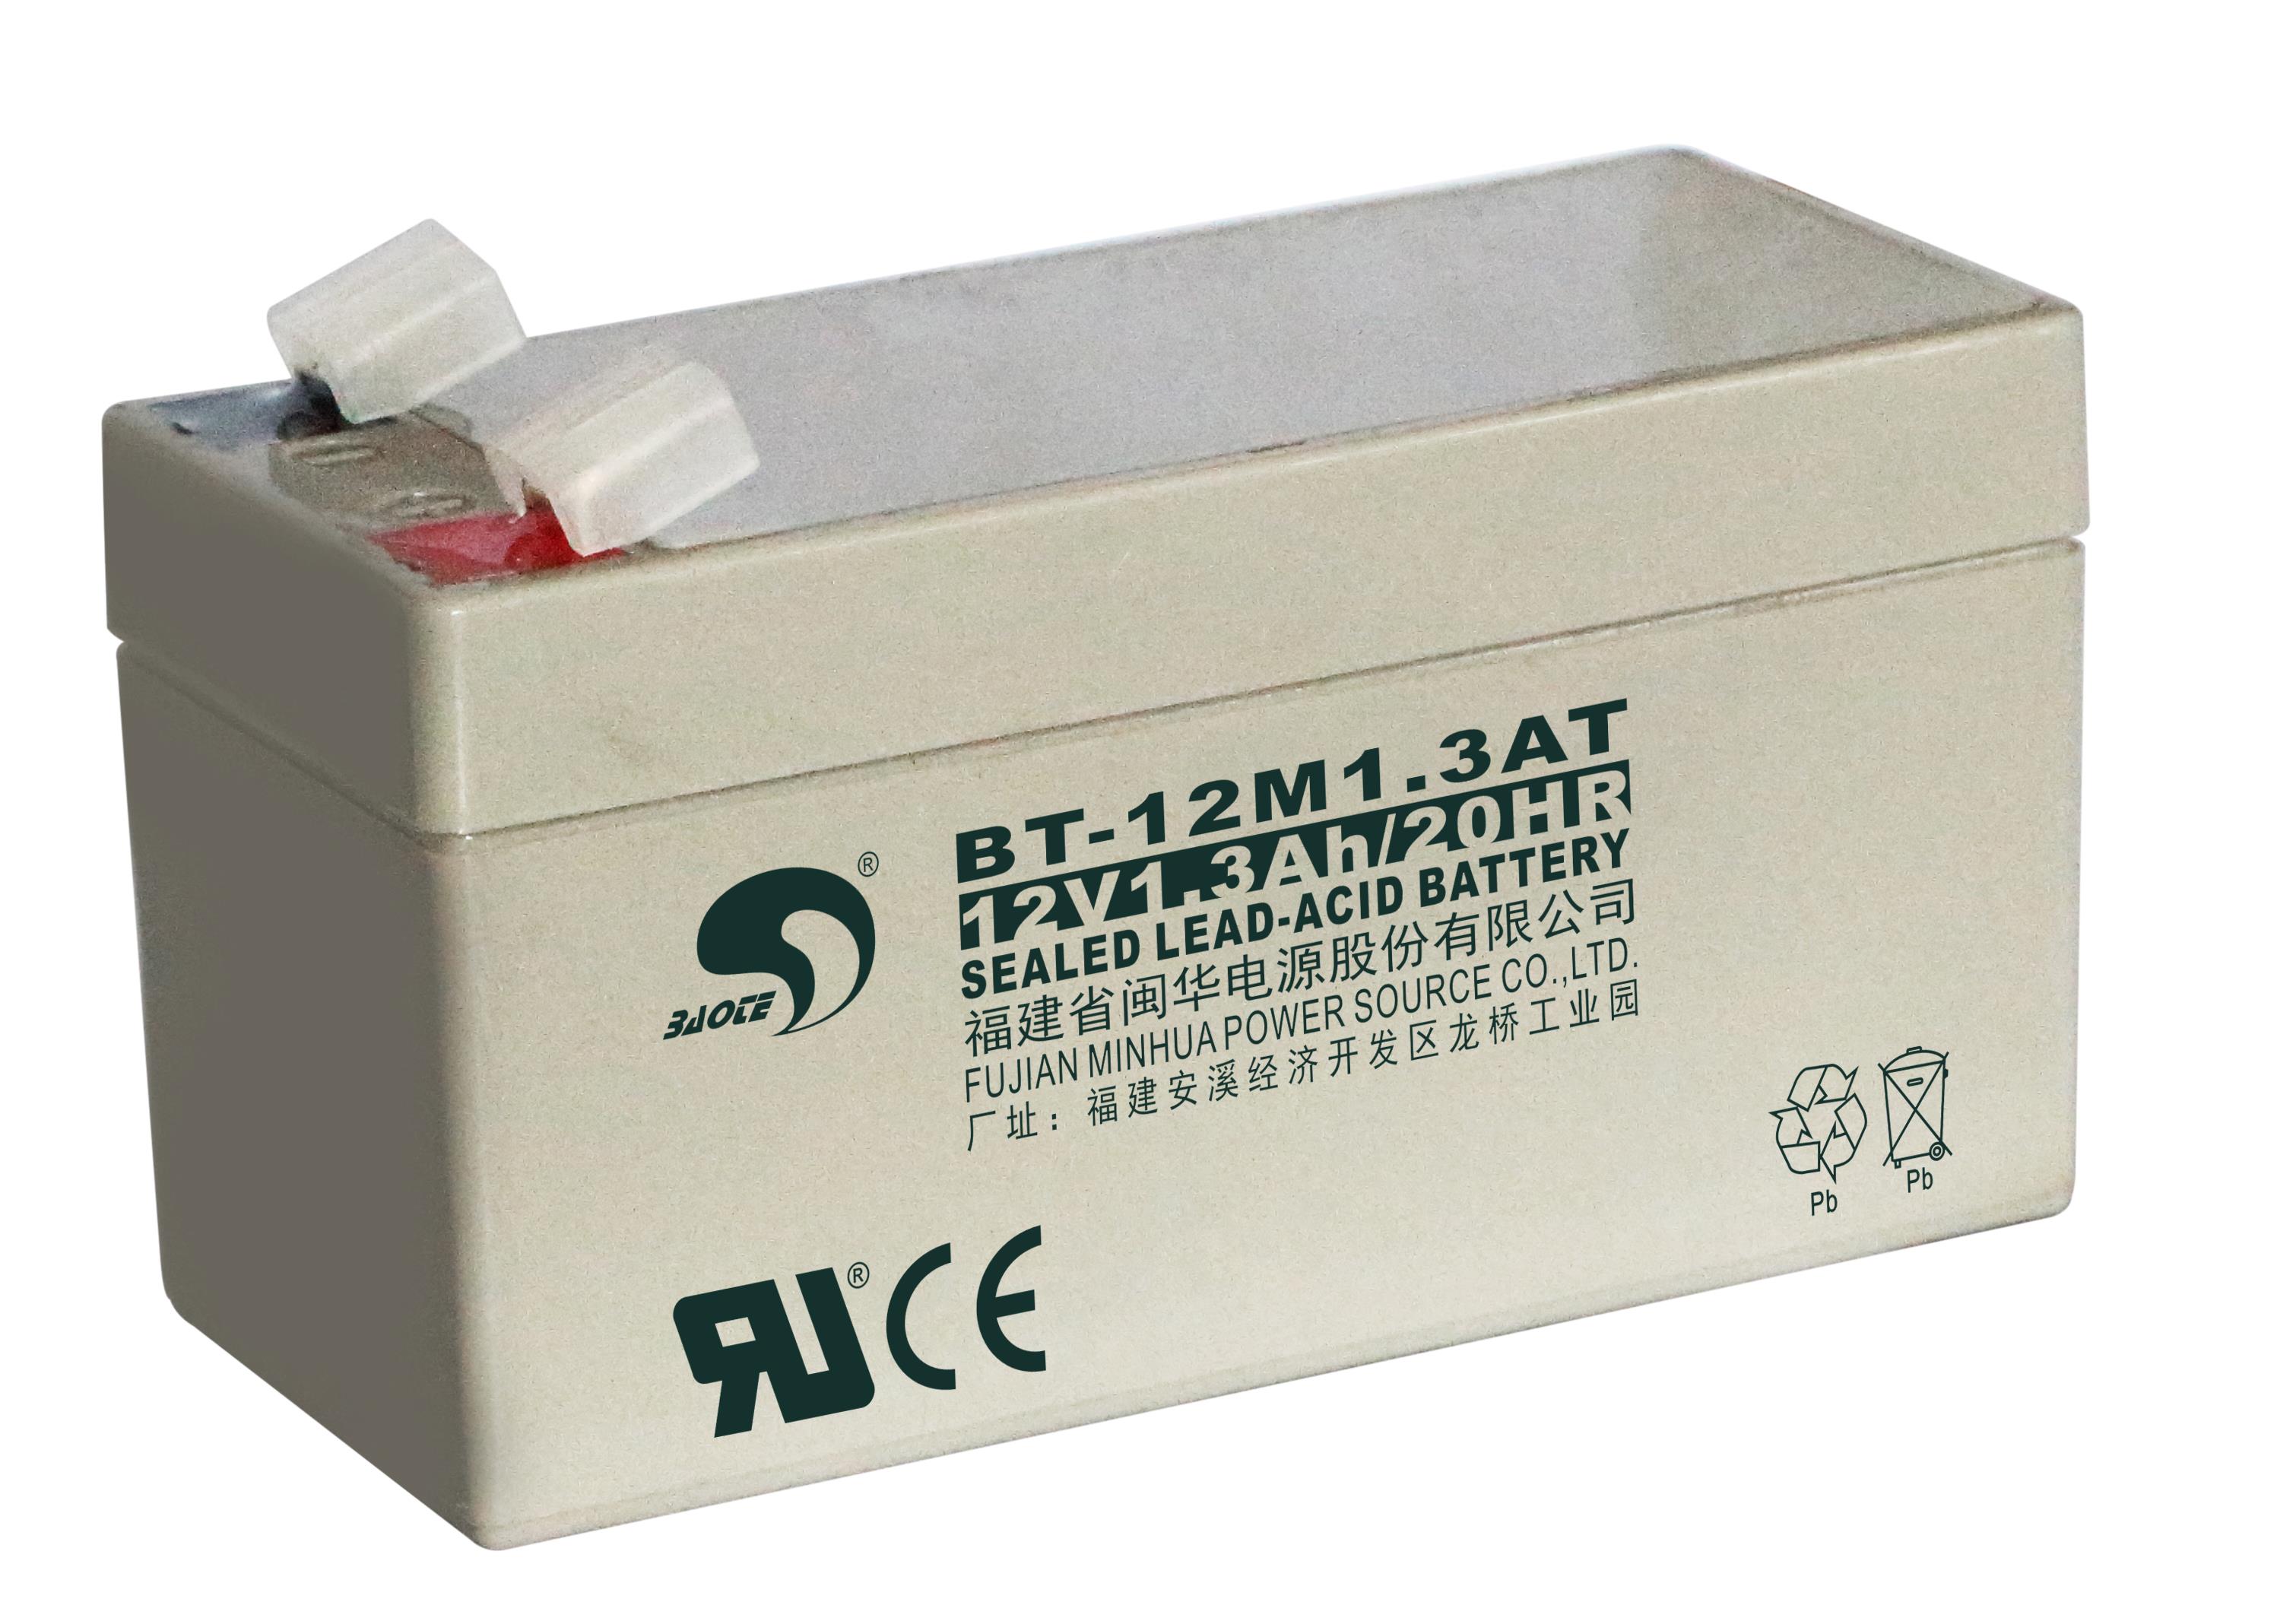 SETTER BT-12M1.3AT (12V1.3Ah/20HR) Maintenance-free Lead-acid Battery Cashier Battery